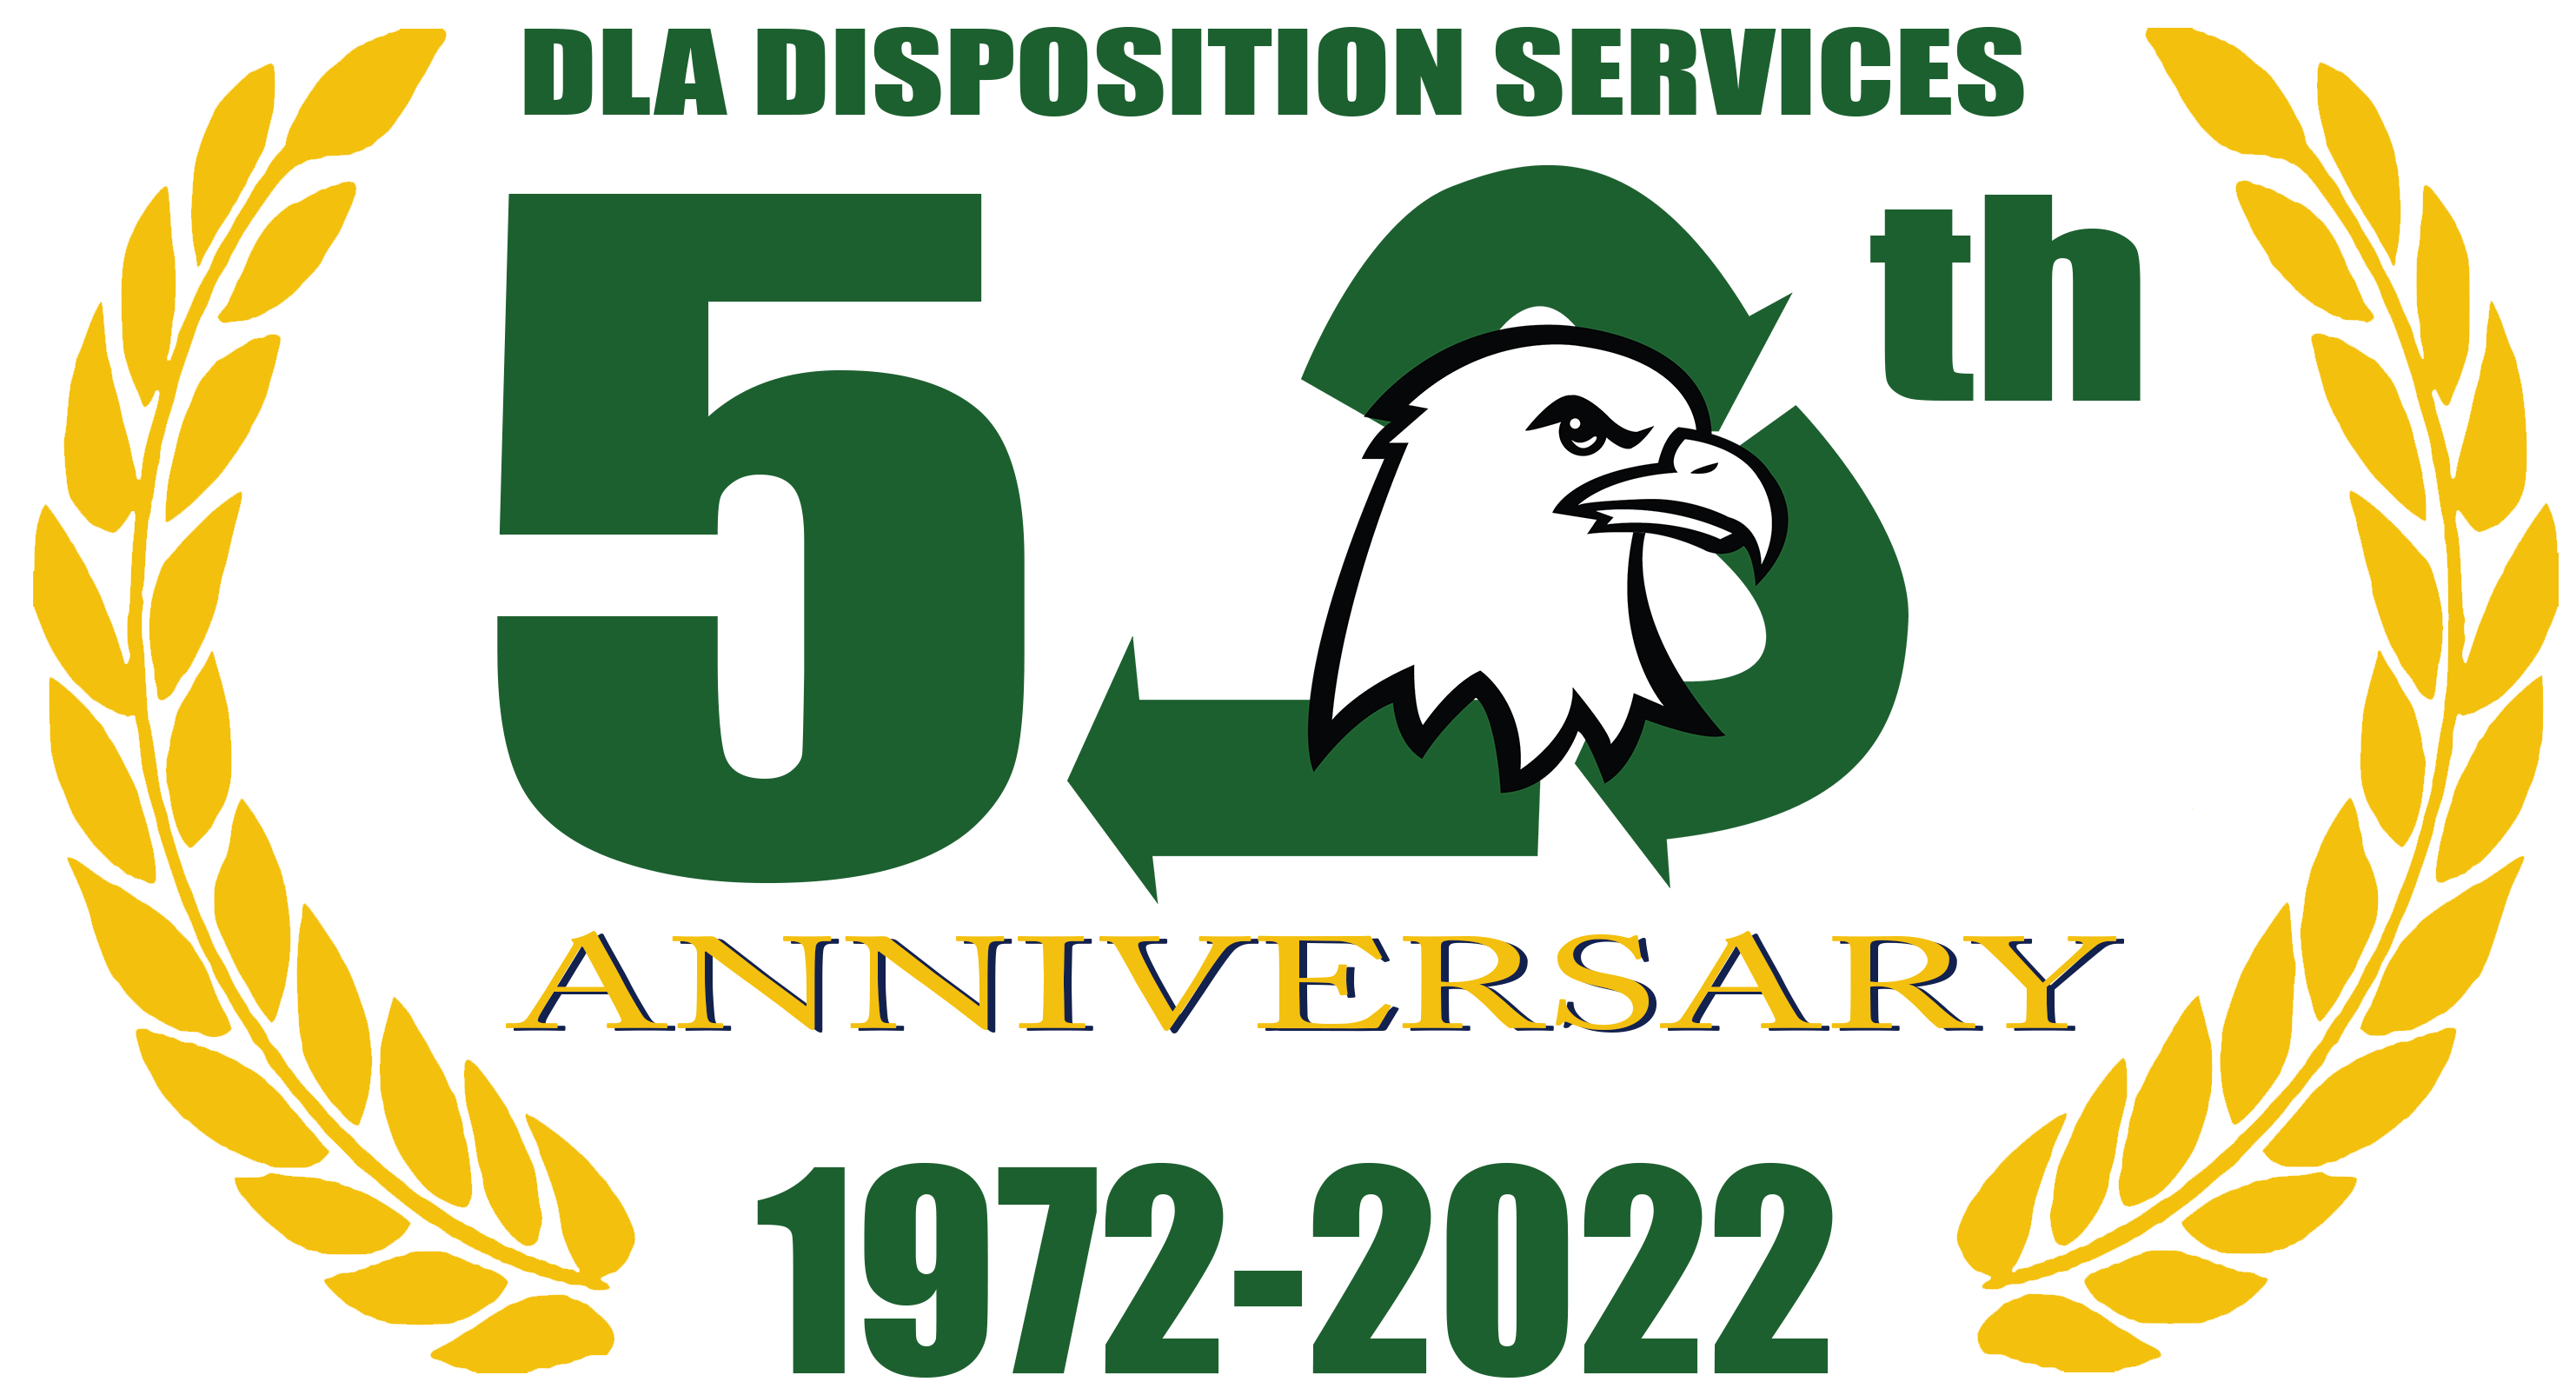 50th Anniversary emblem